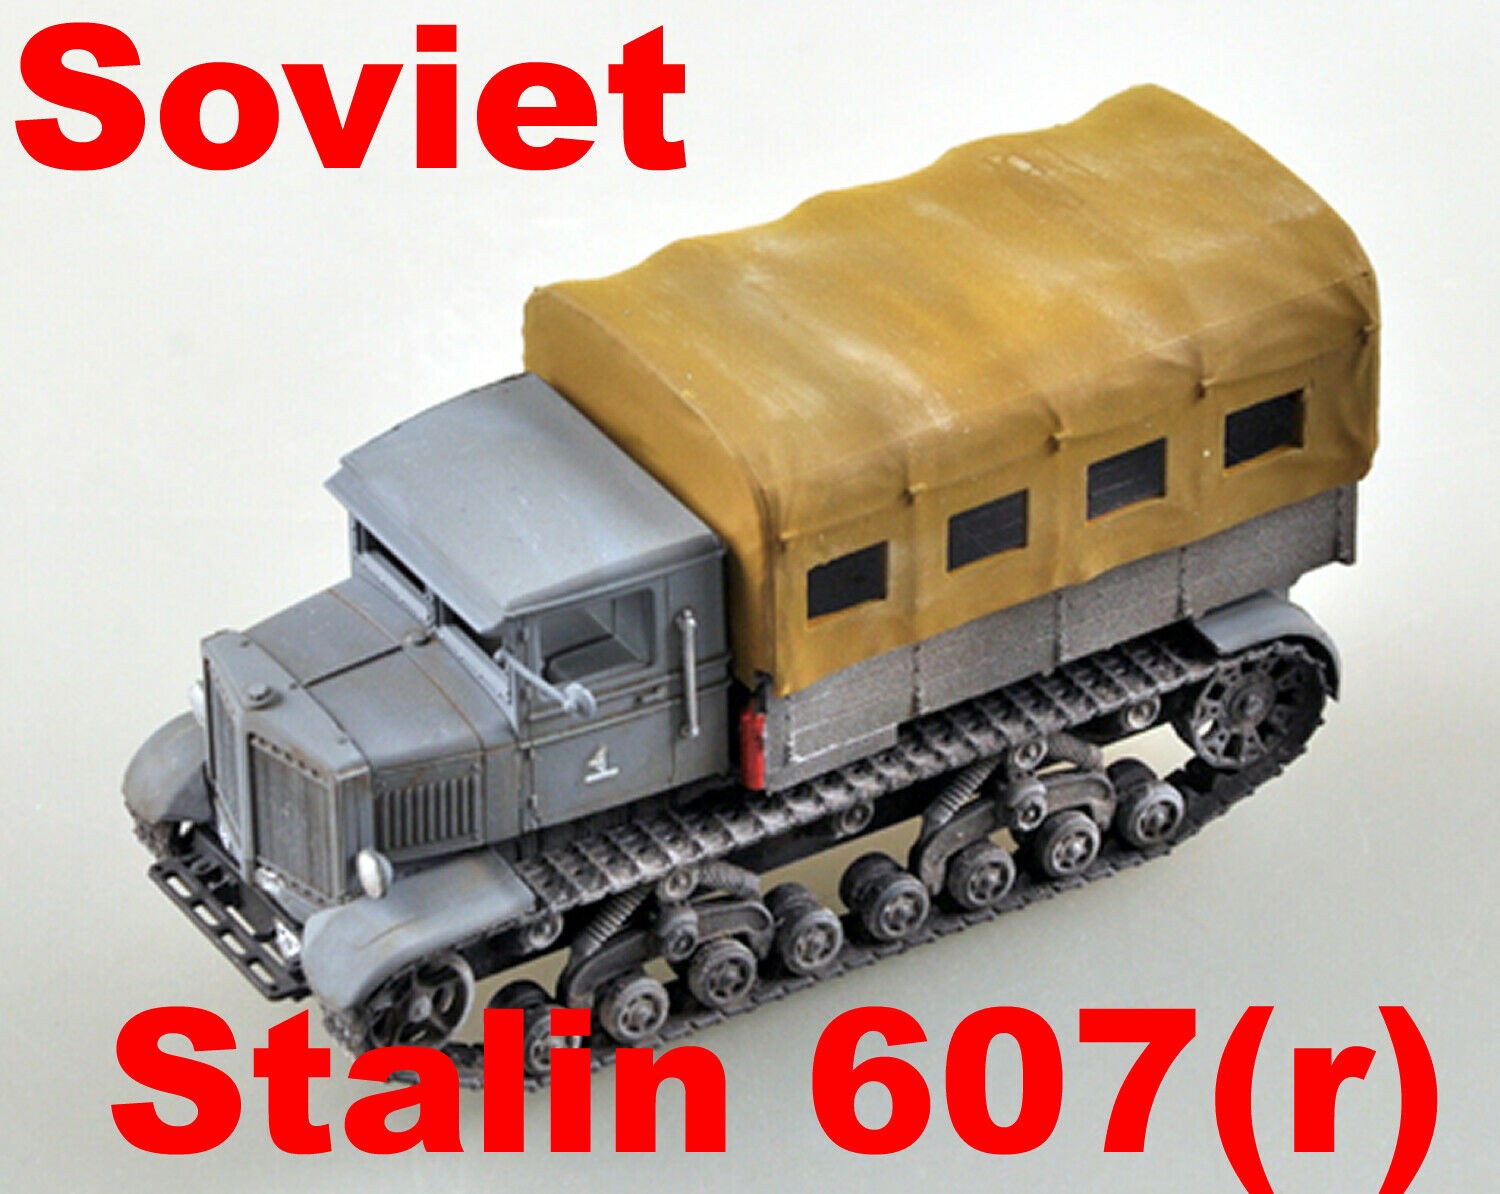 Easy Model 35113 Voroshilovets STALIN 607 ( r )  1:72